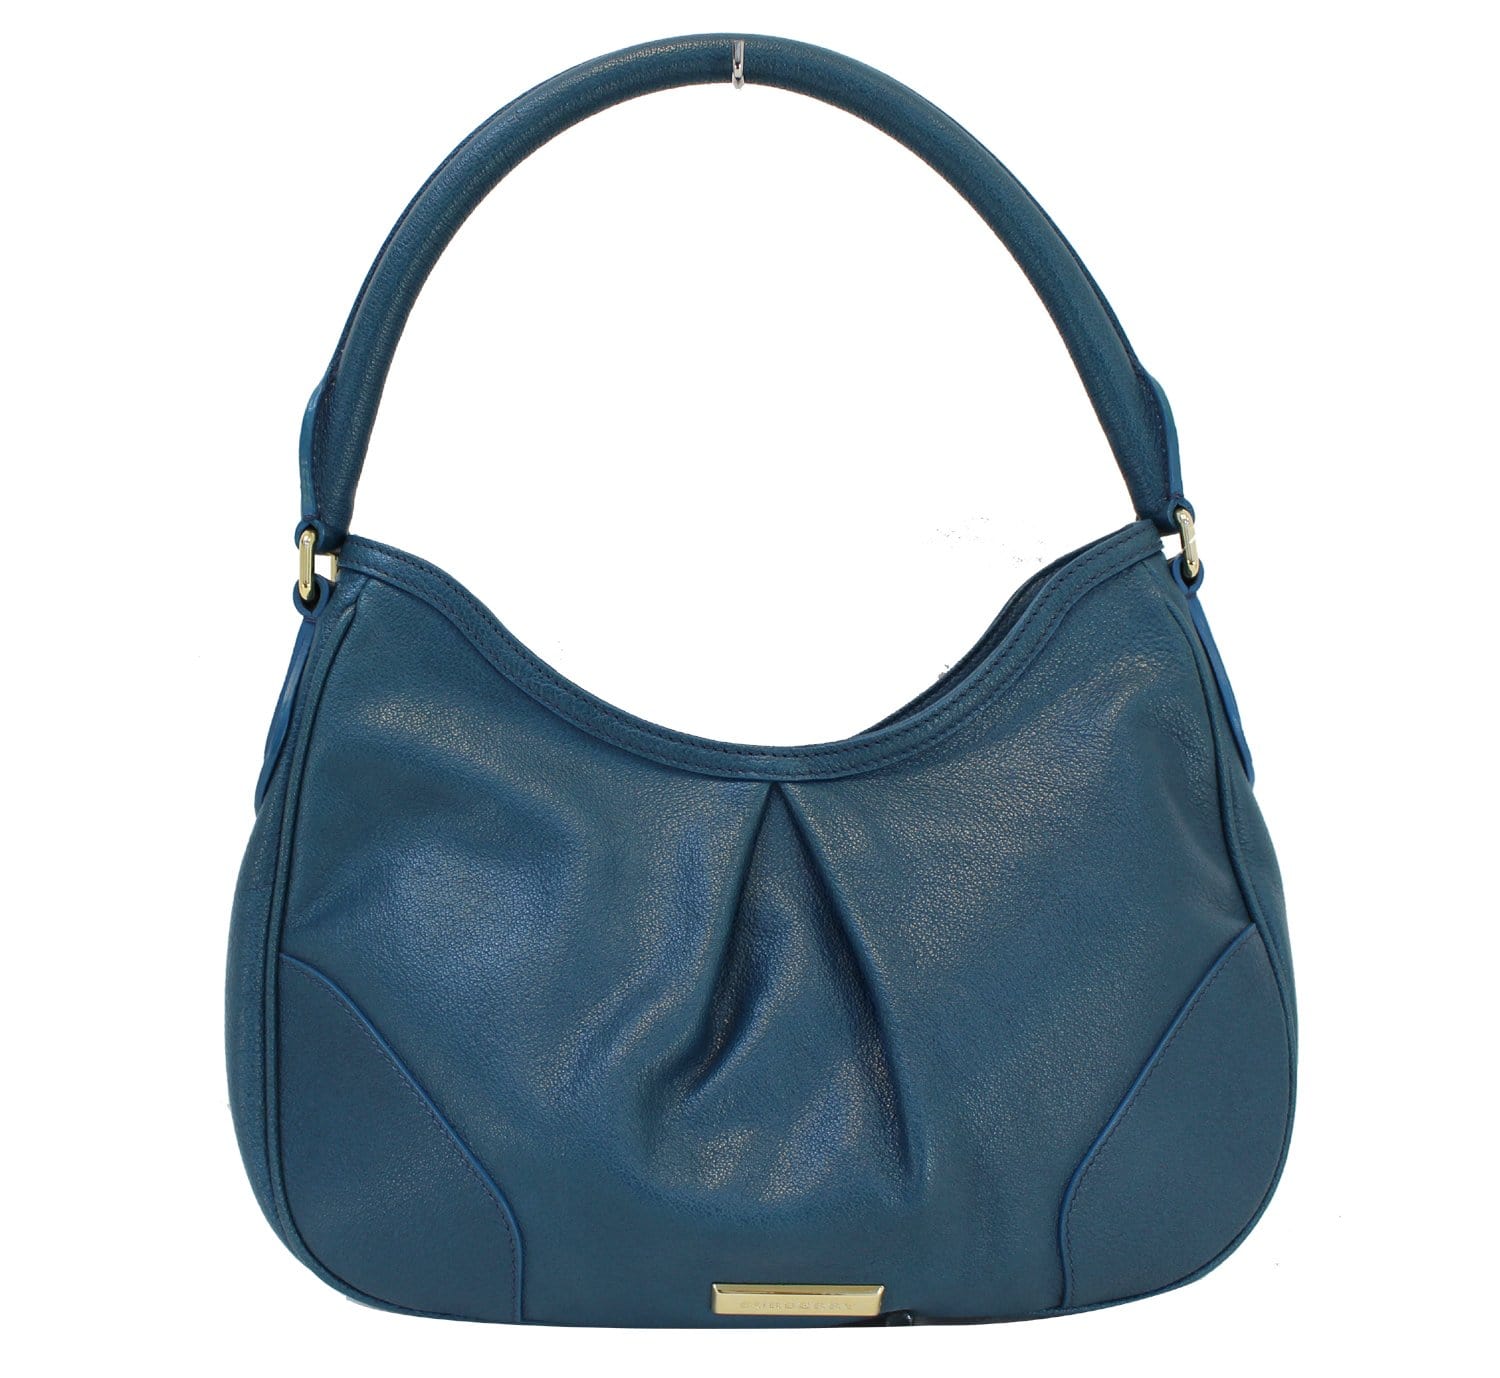 burberry leather handbags sale